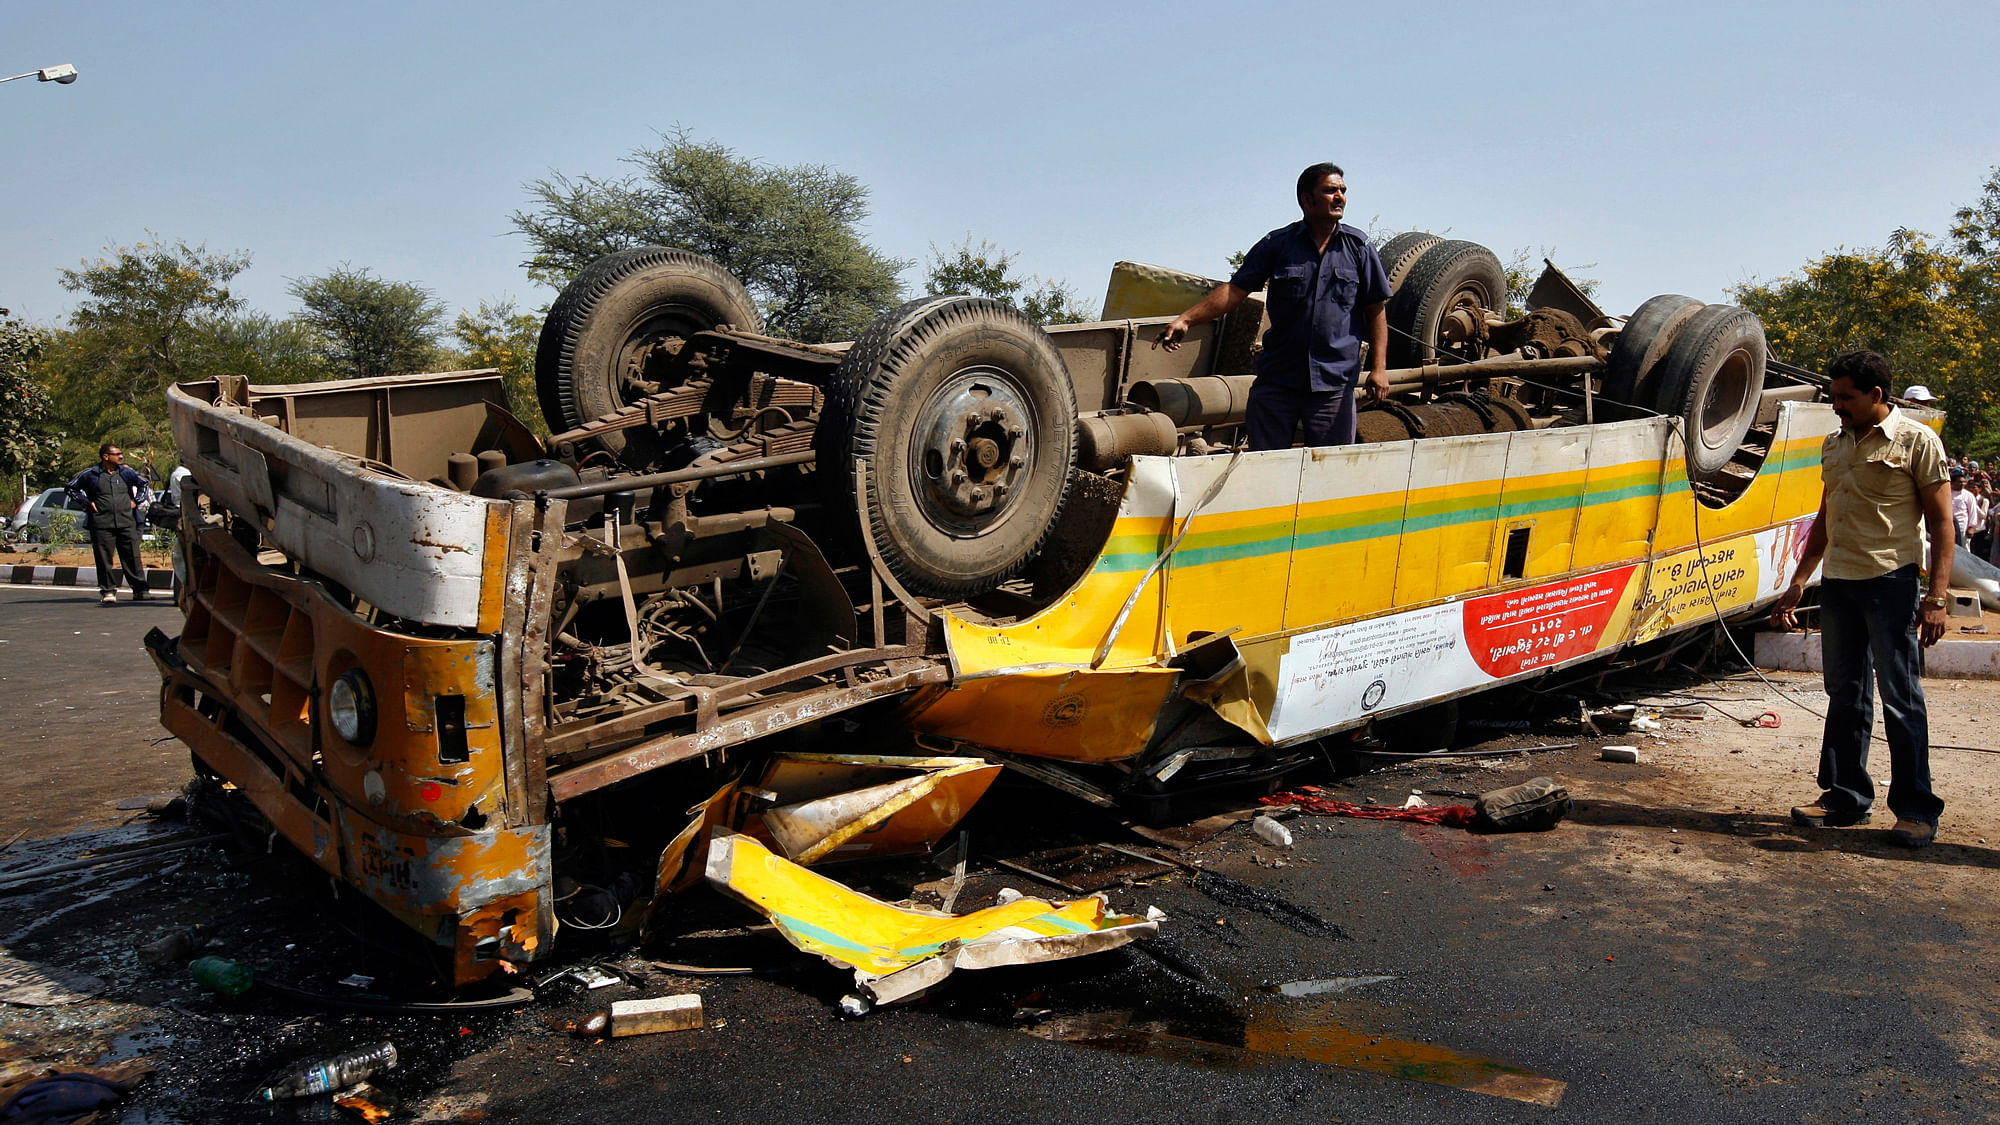 File photo of an overturned damaged passenger bus after an accident at Gandhinagar, Gujarat. (Photo: Reuters)